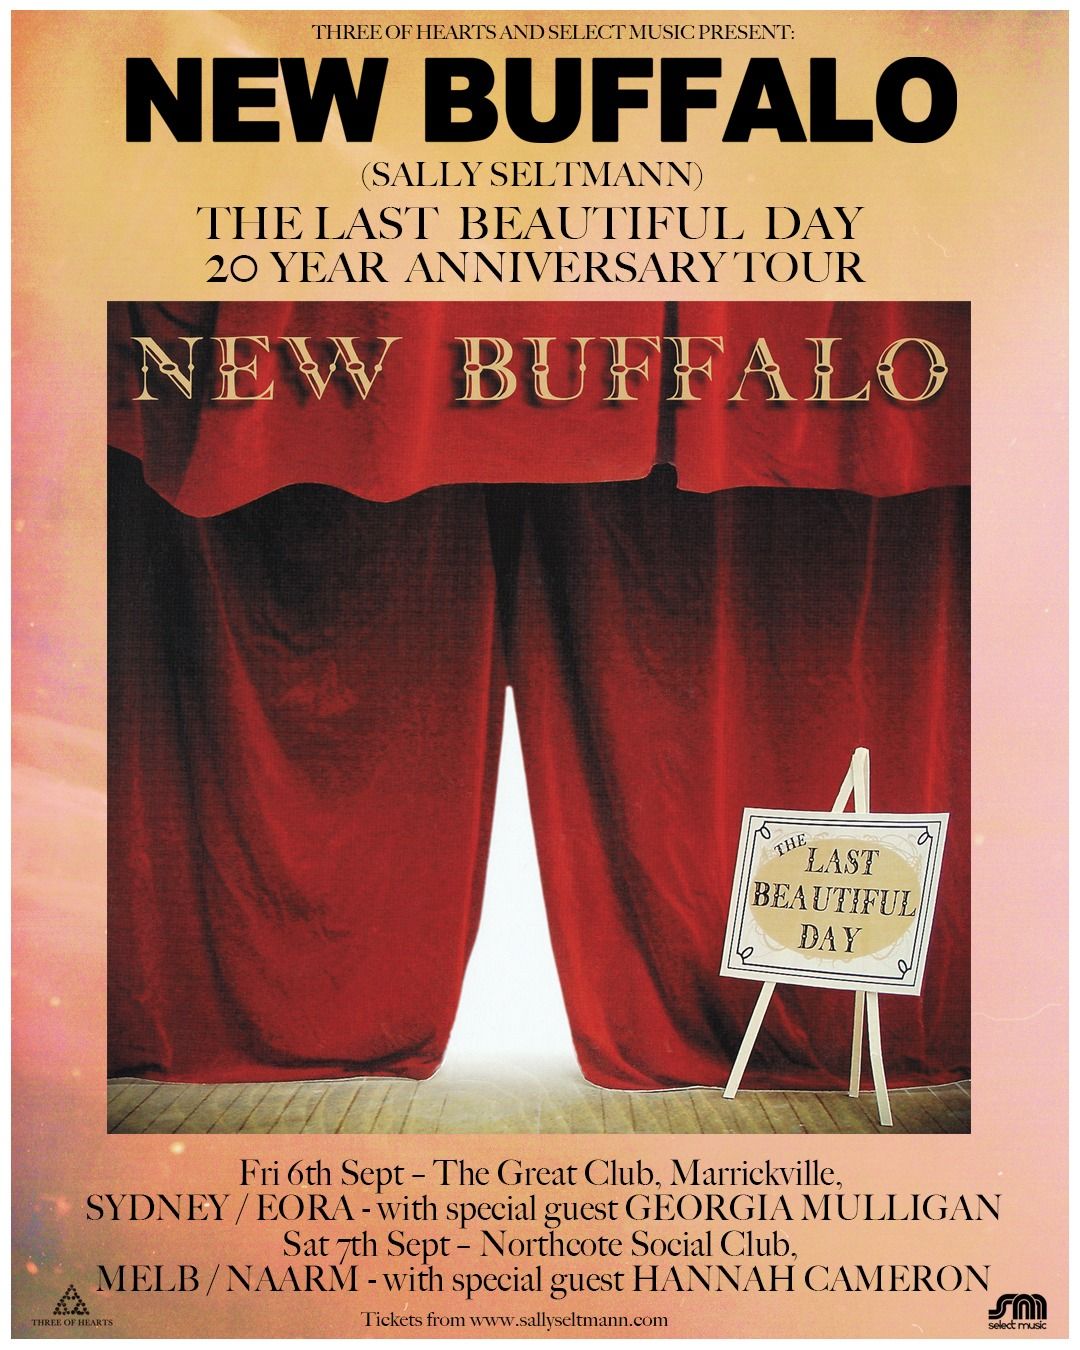 New Buffalo (Sally Seltmann) - 20 Year Anniversary